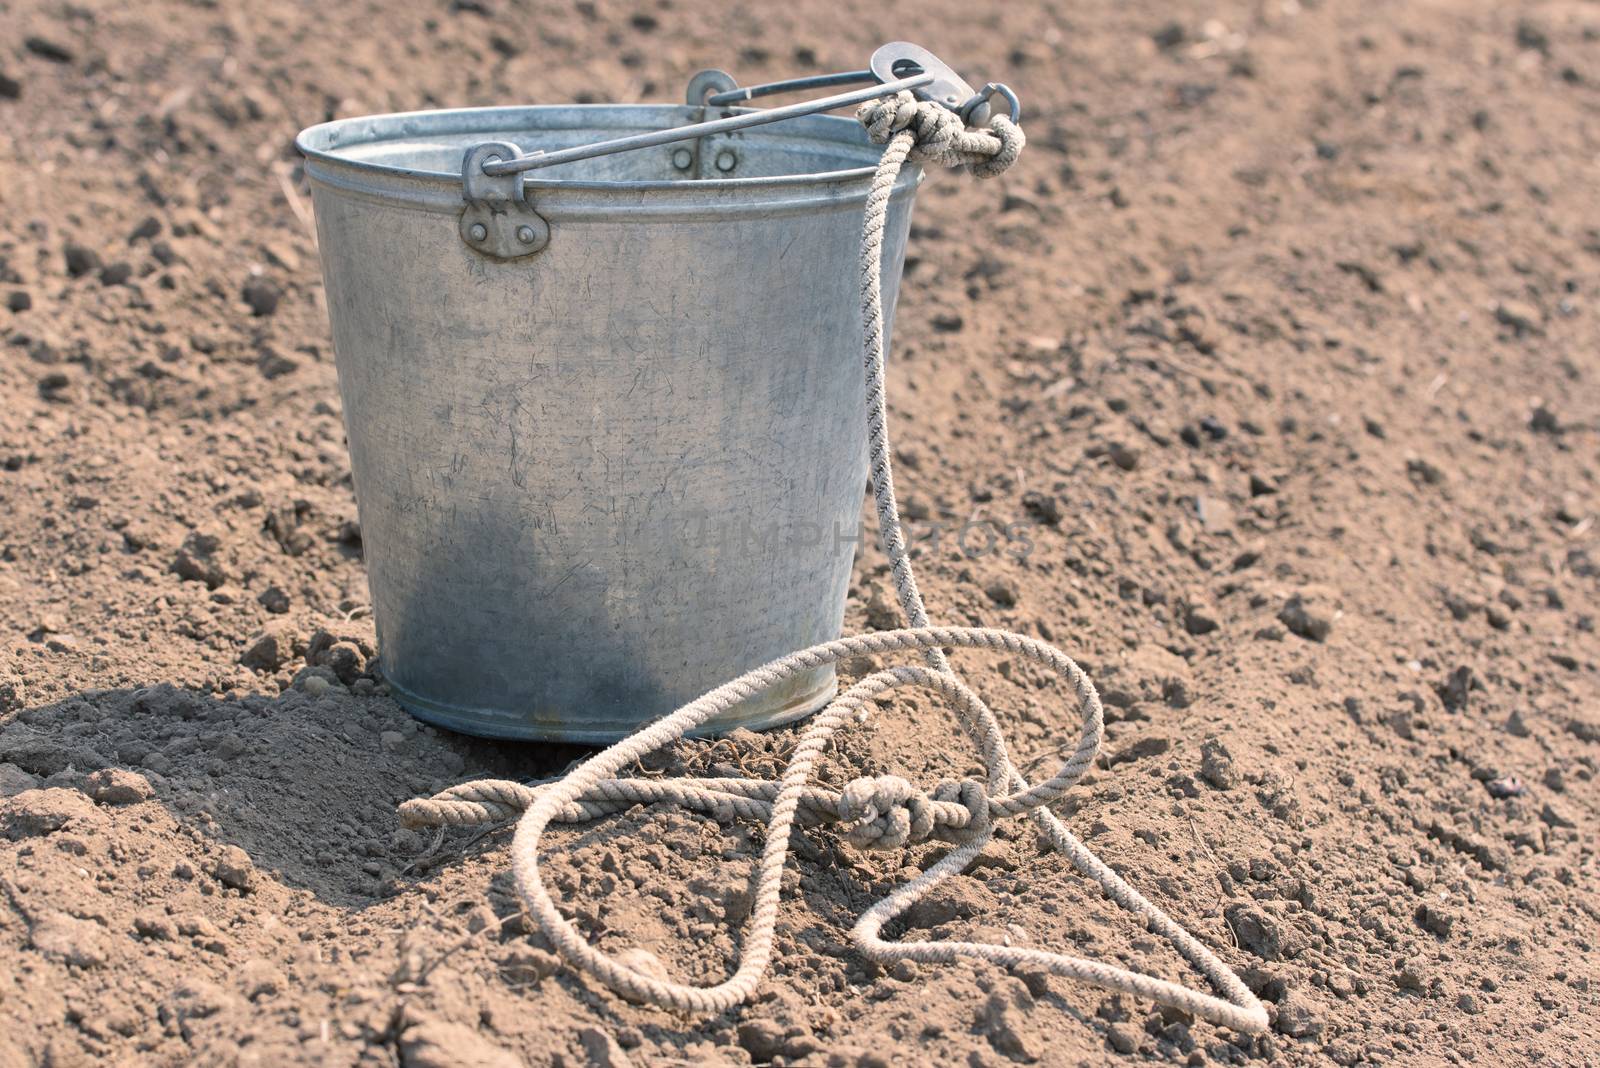 Bucket on the ground. Empty metal bucket